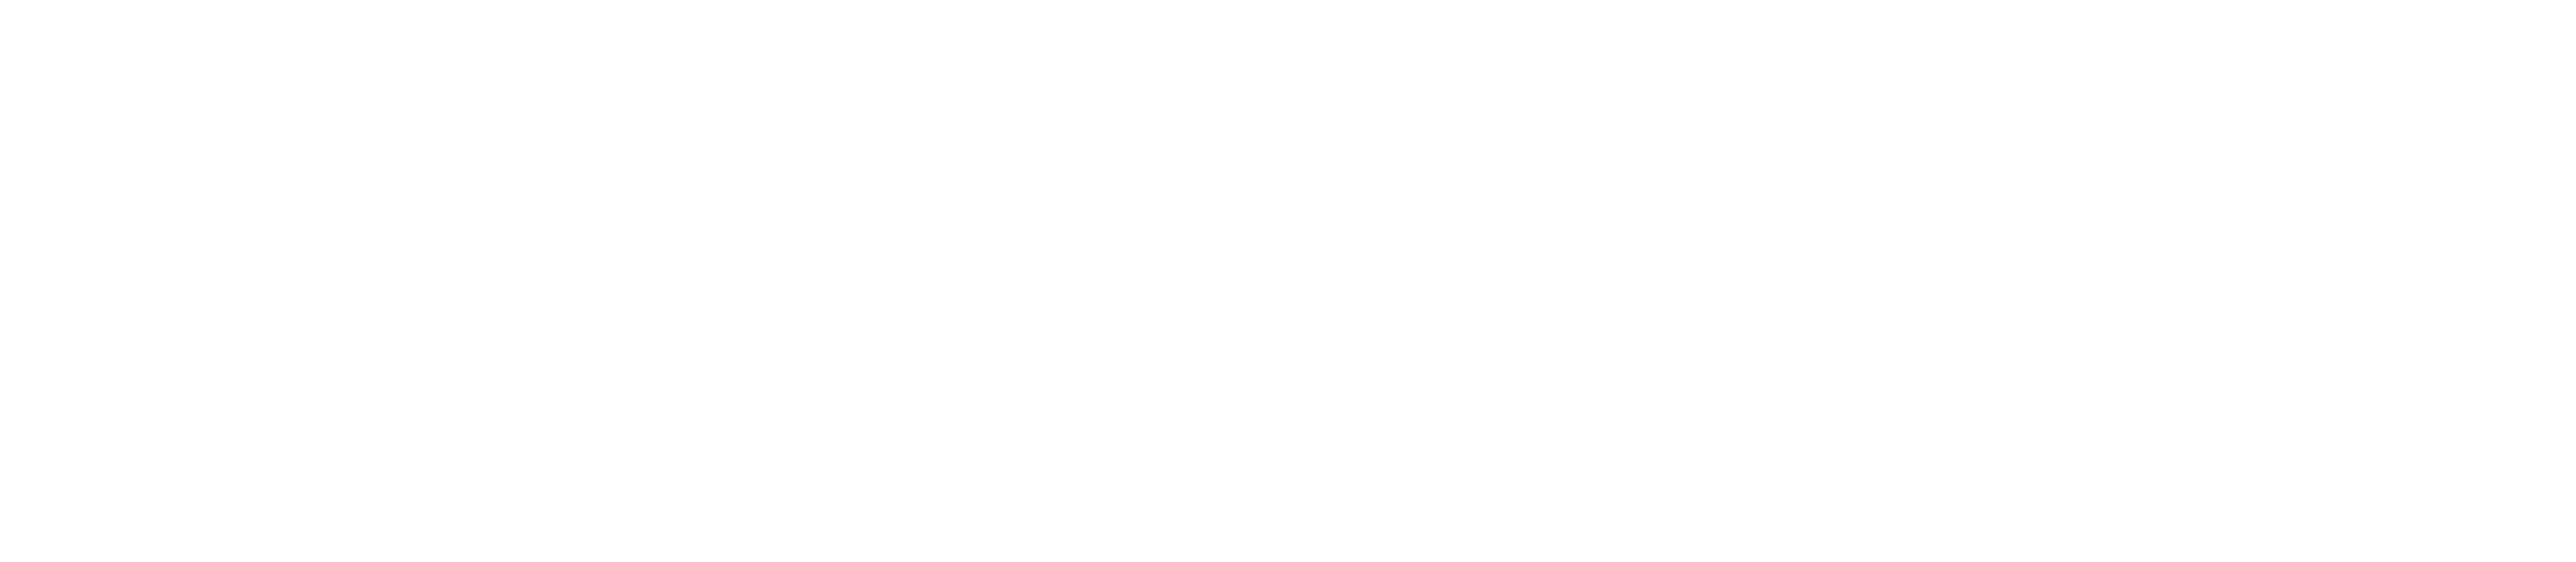 JCO Oncology Practice Logo